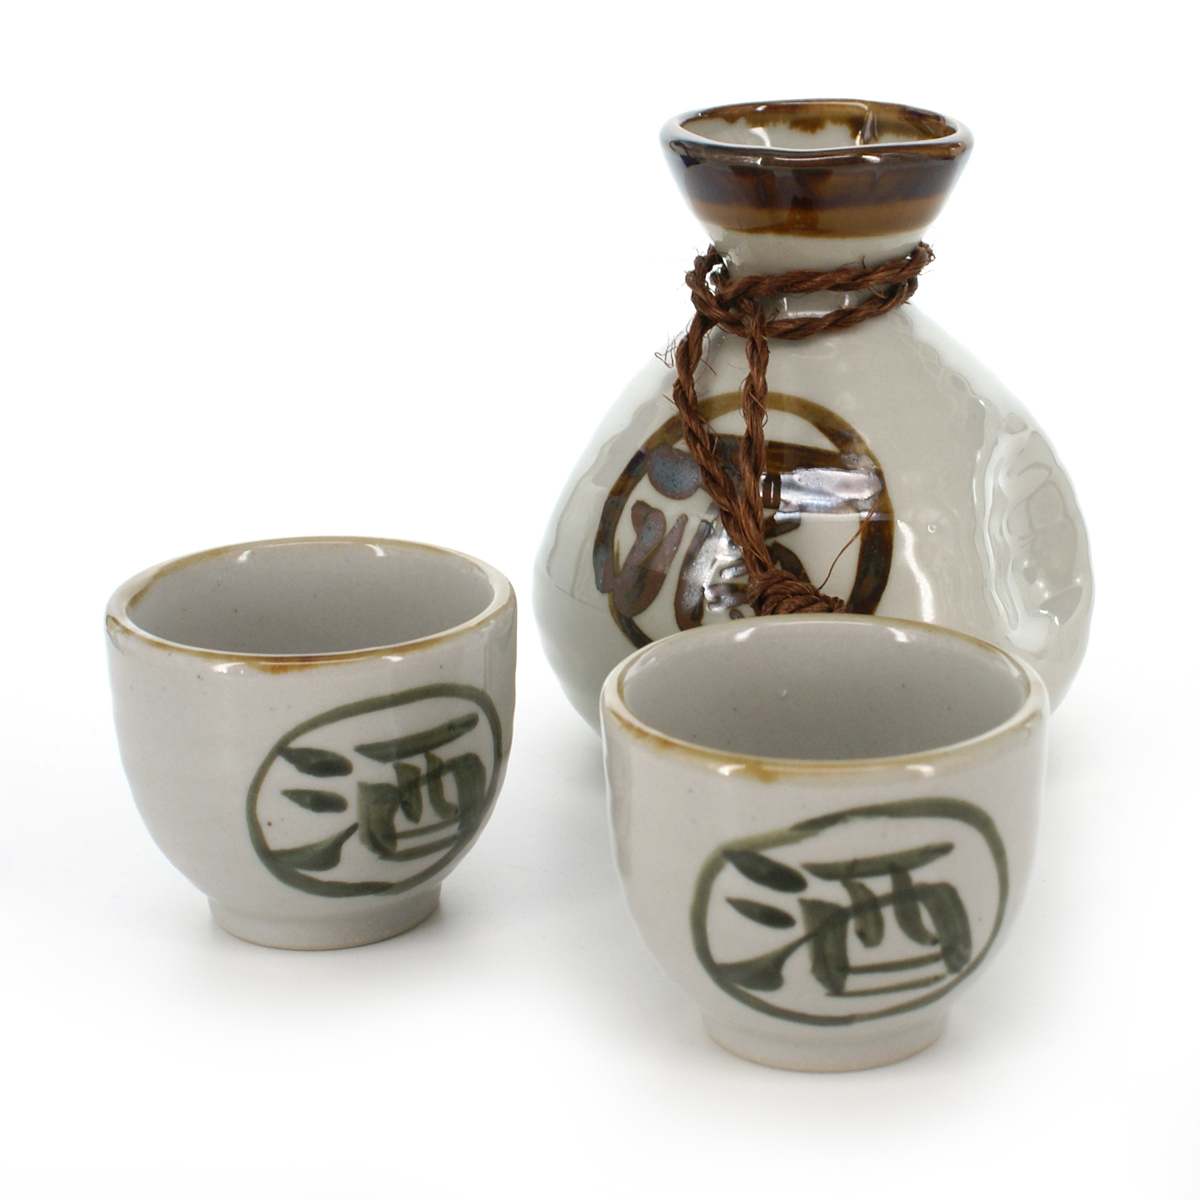 Servizio di sake giapponese in ceramica bianca, 1 bottiglia e 2 tazze,  SHIRO KANJI